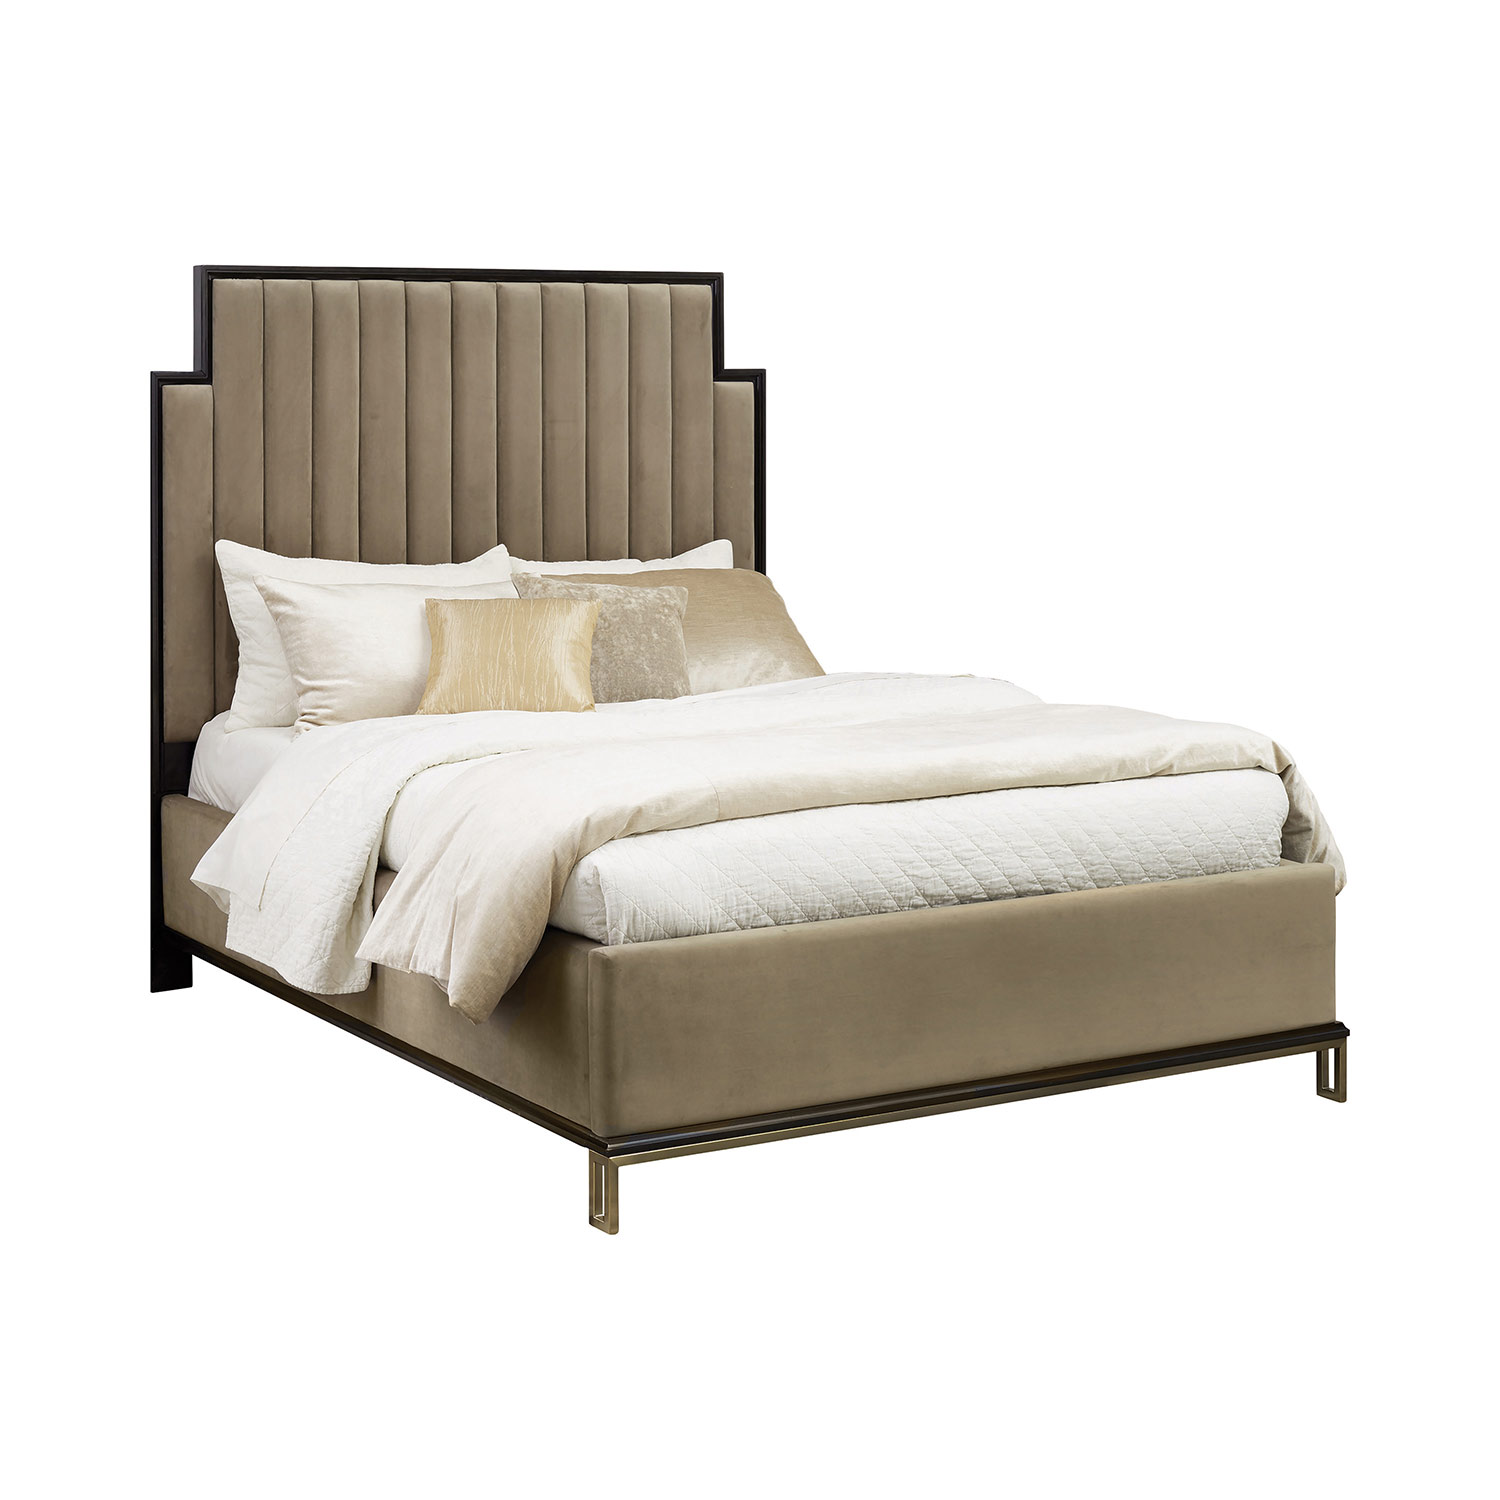 Coaster Formosa Bed - Americano/Camel Velvet